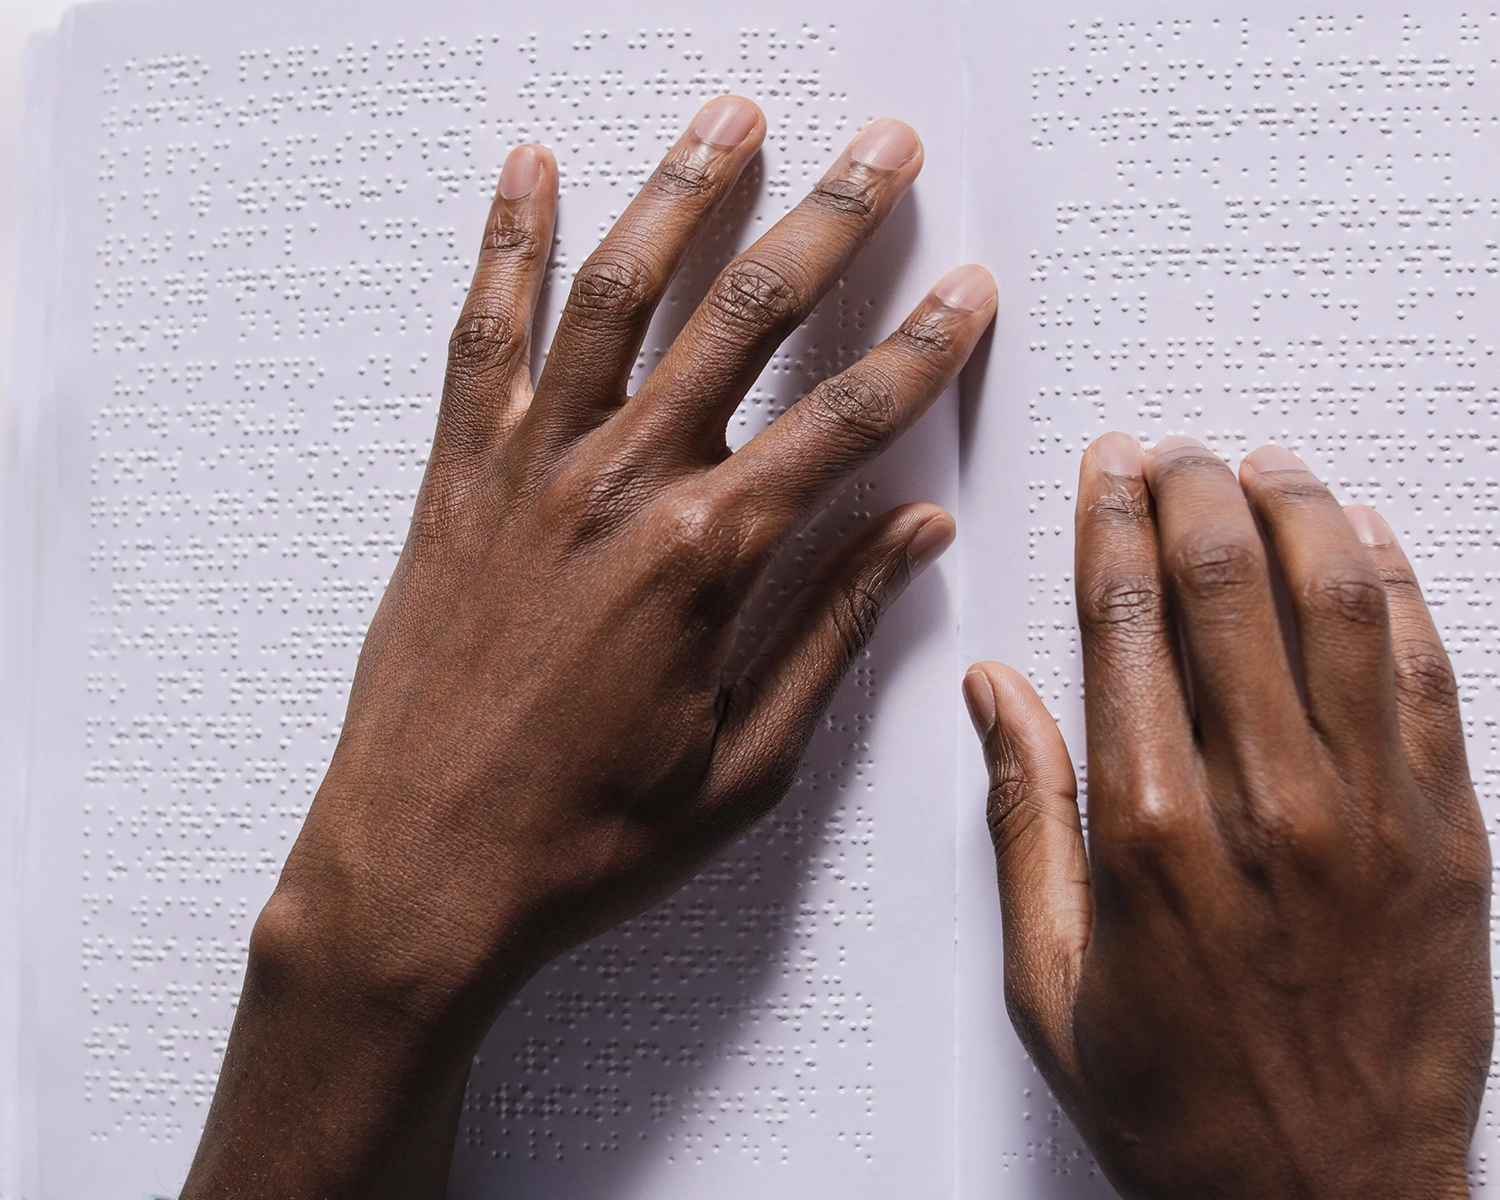 hands on braille